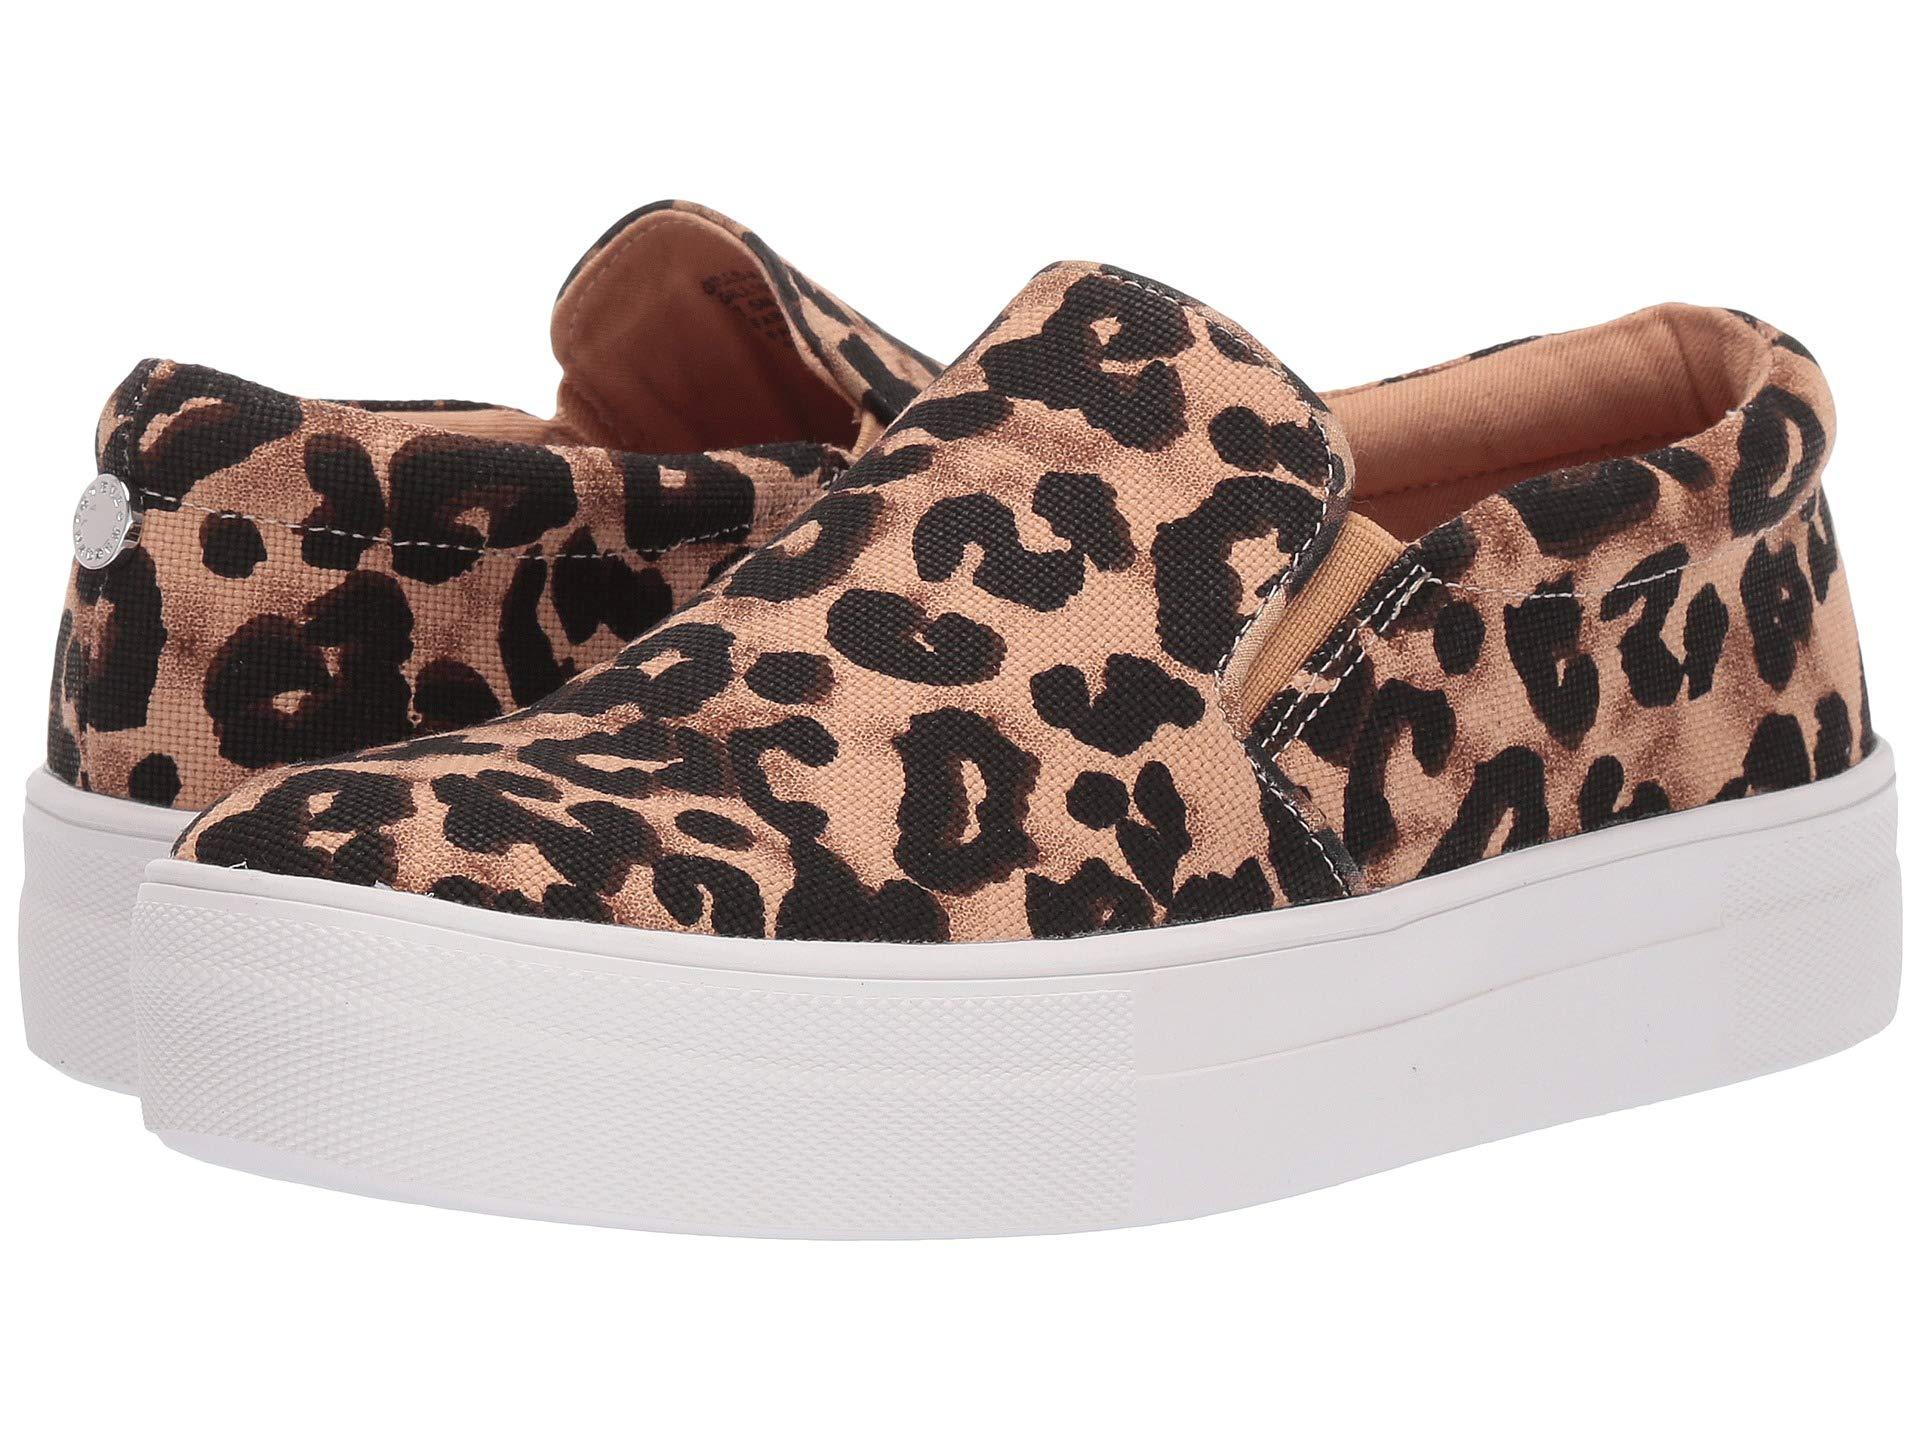 Steve Madden Gills-a Sneaker (leopard) Women's Shoes - Lyst